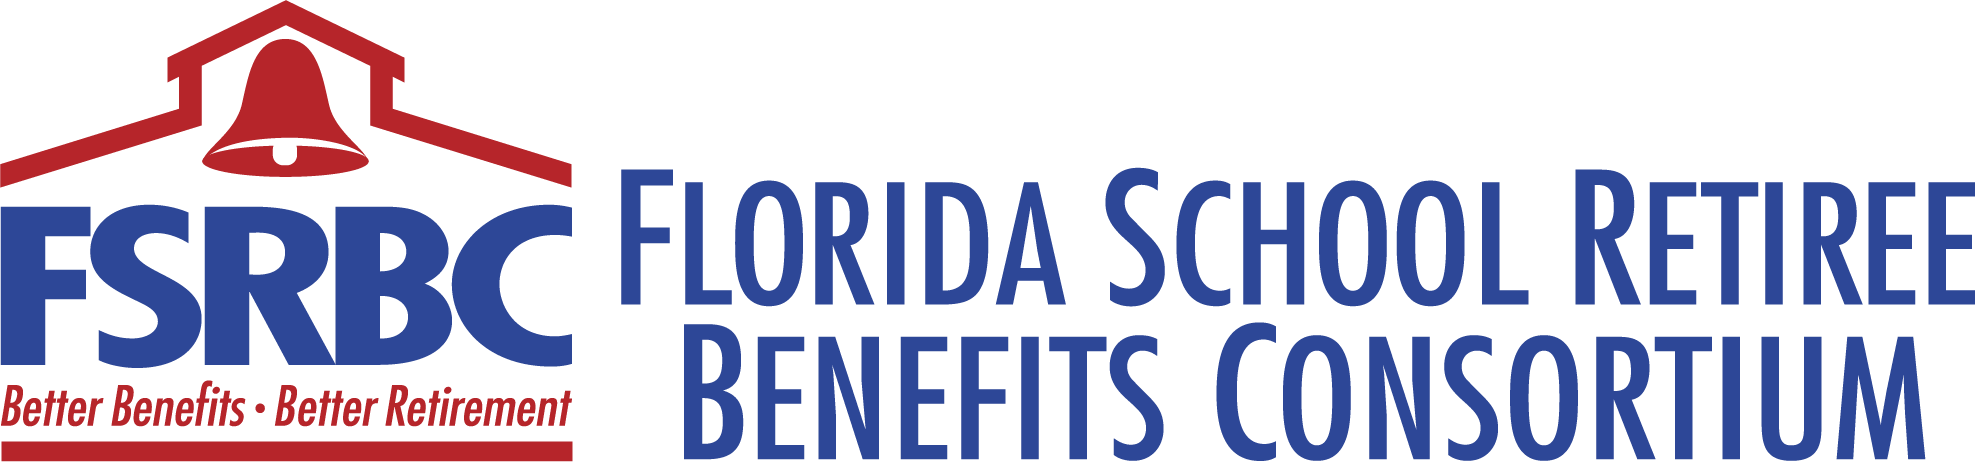 Florida School Retiree Benefits Consortium (FSRBC)